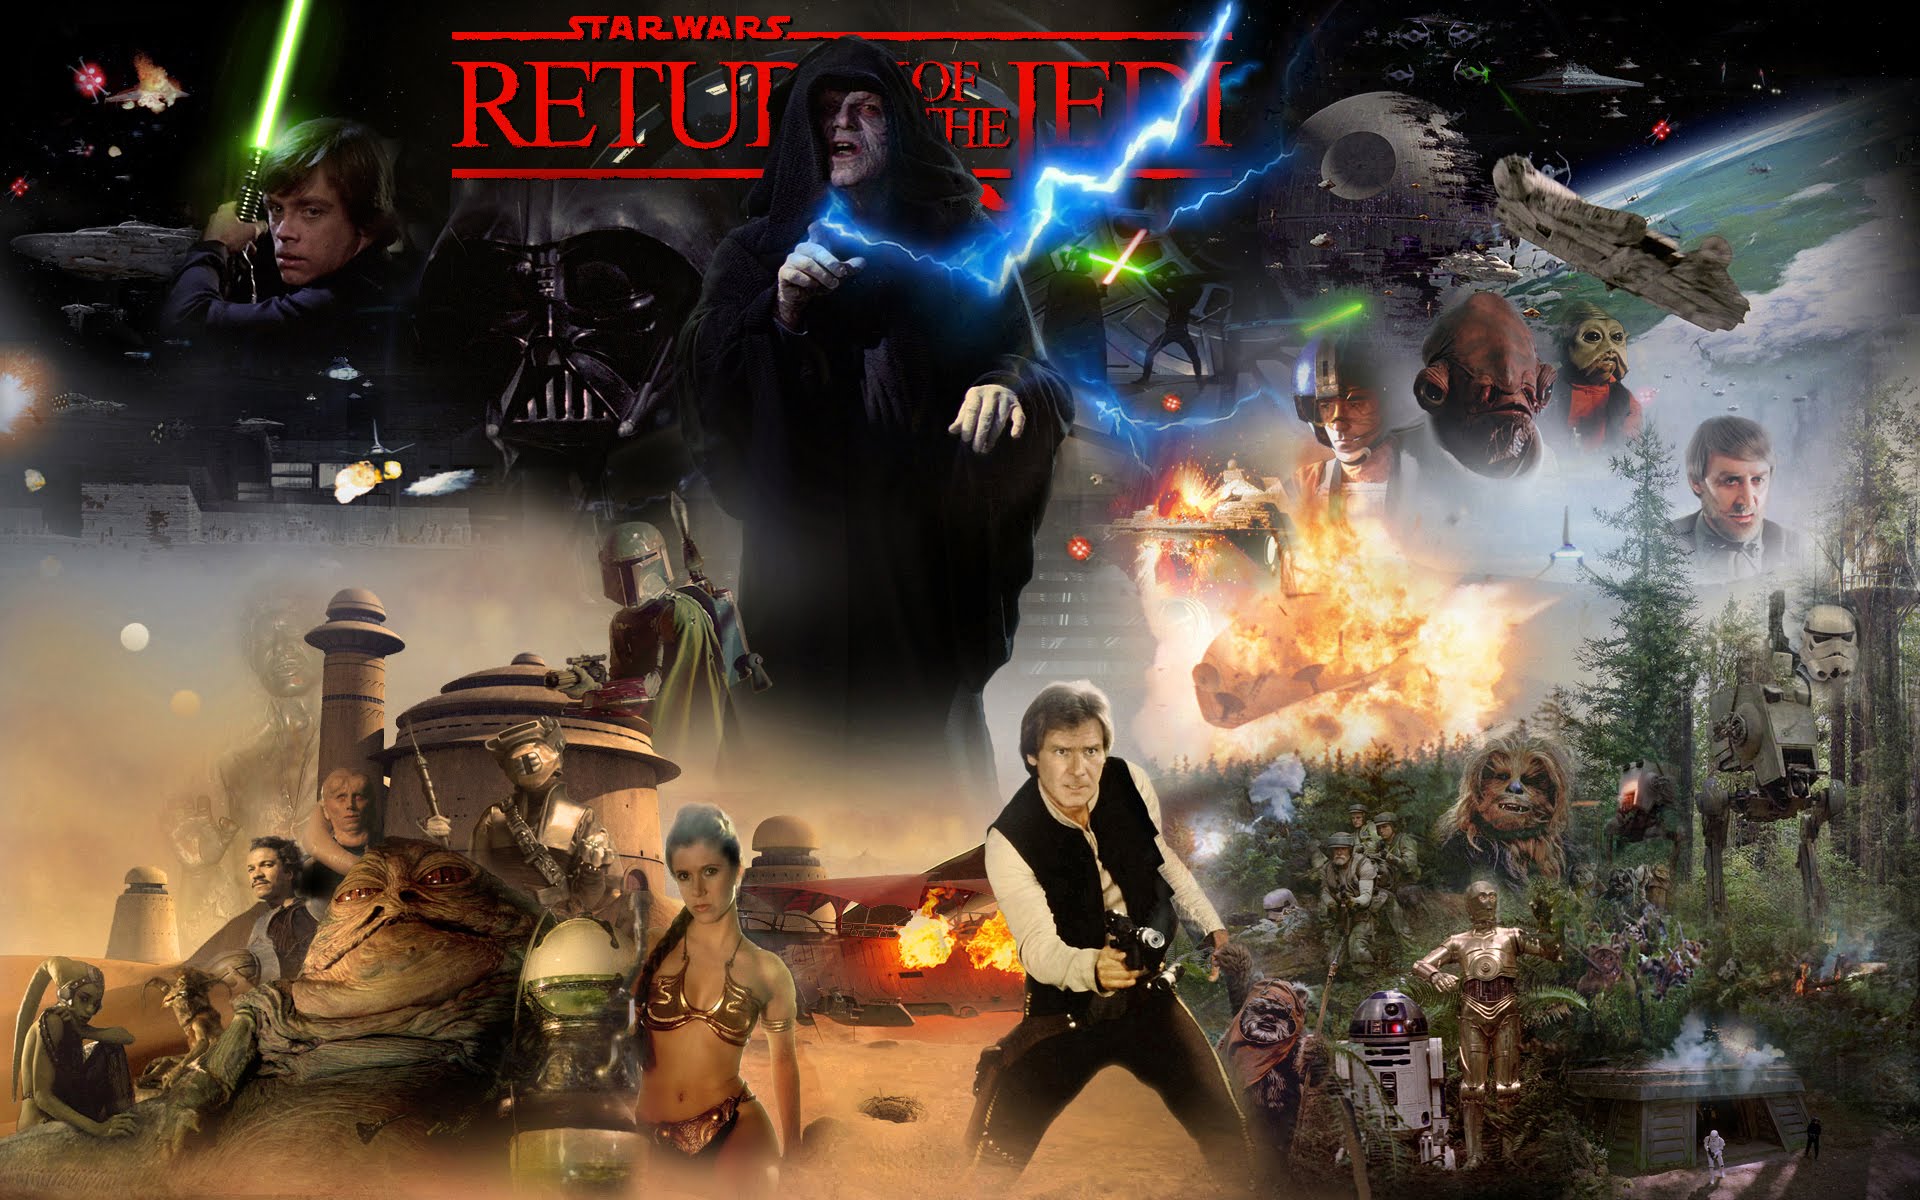 Star Wars Episode VI: Return Of The Jedi  Backgrounds on Wallpapers Vista